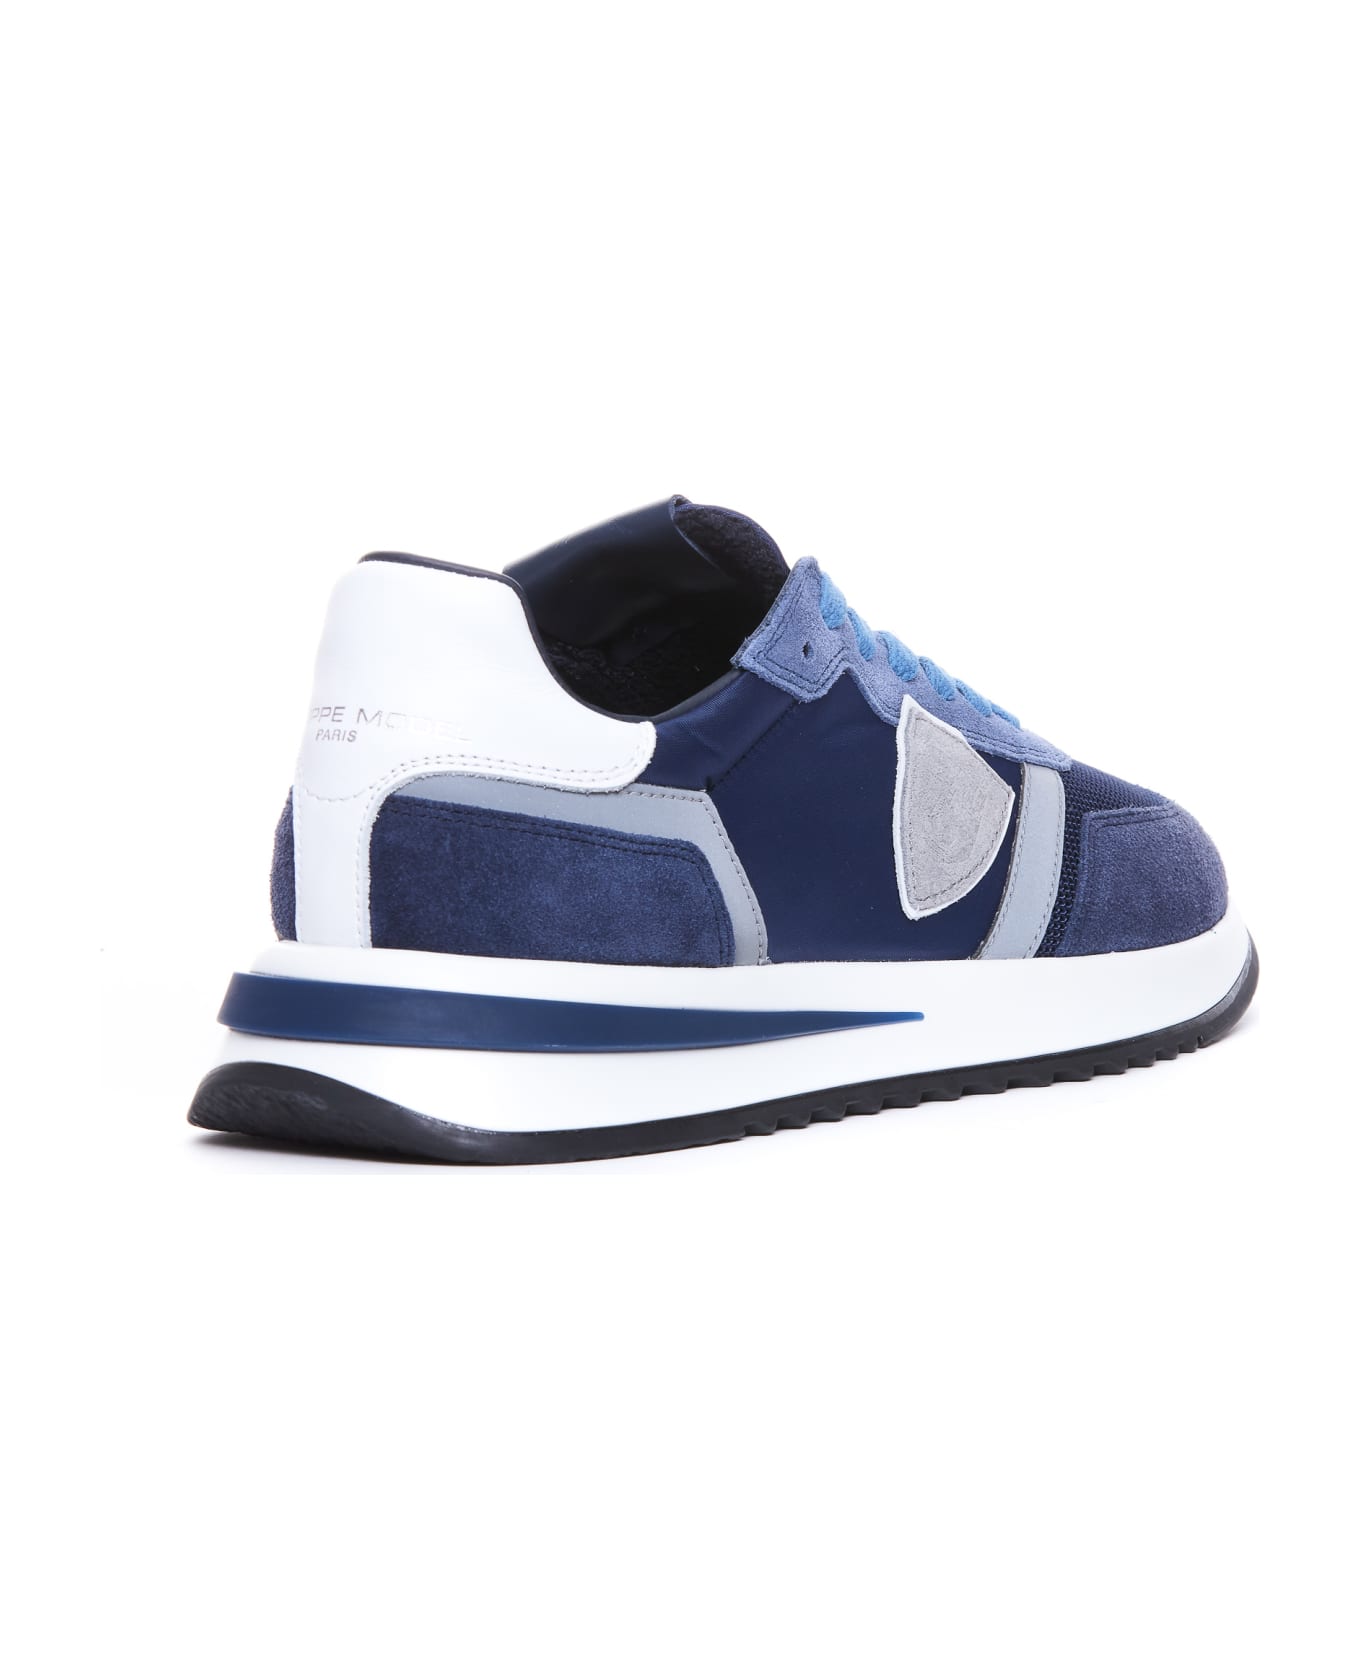 Philippe Model Tropez Sneakers - Blue スニーカー